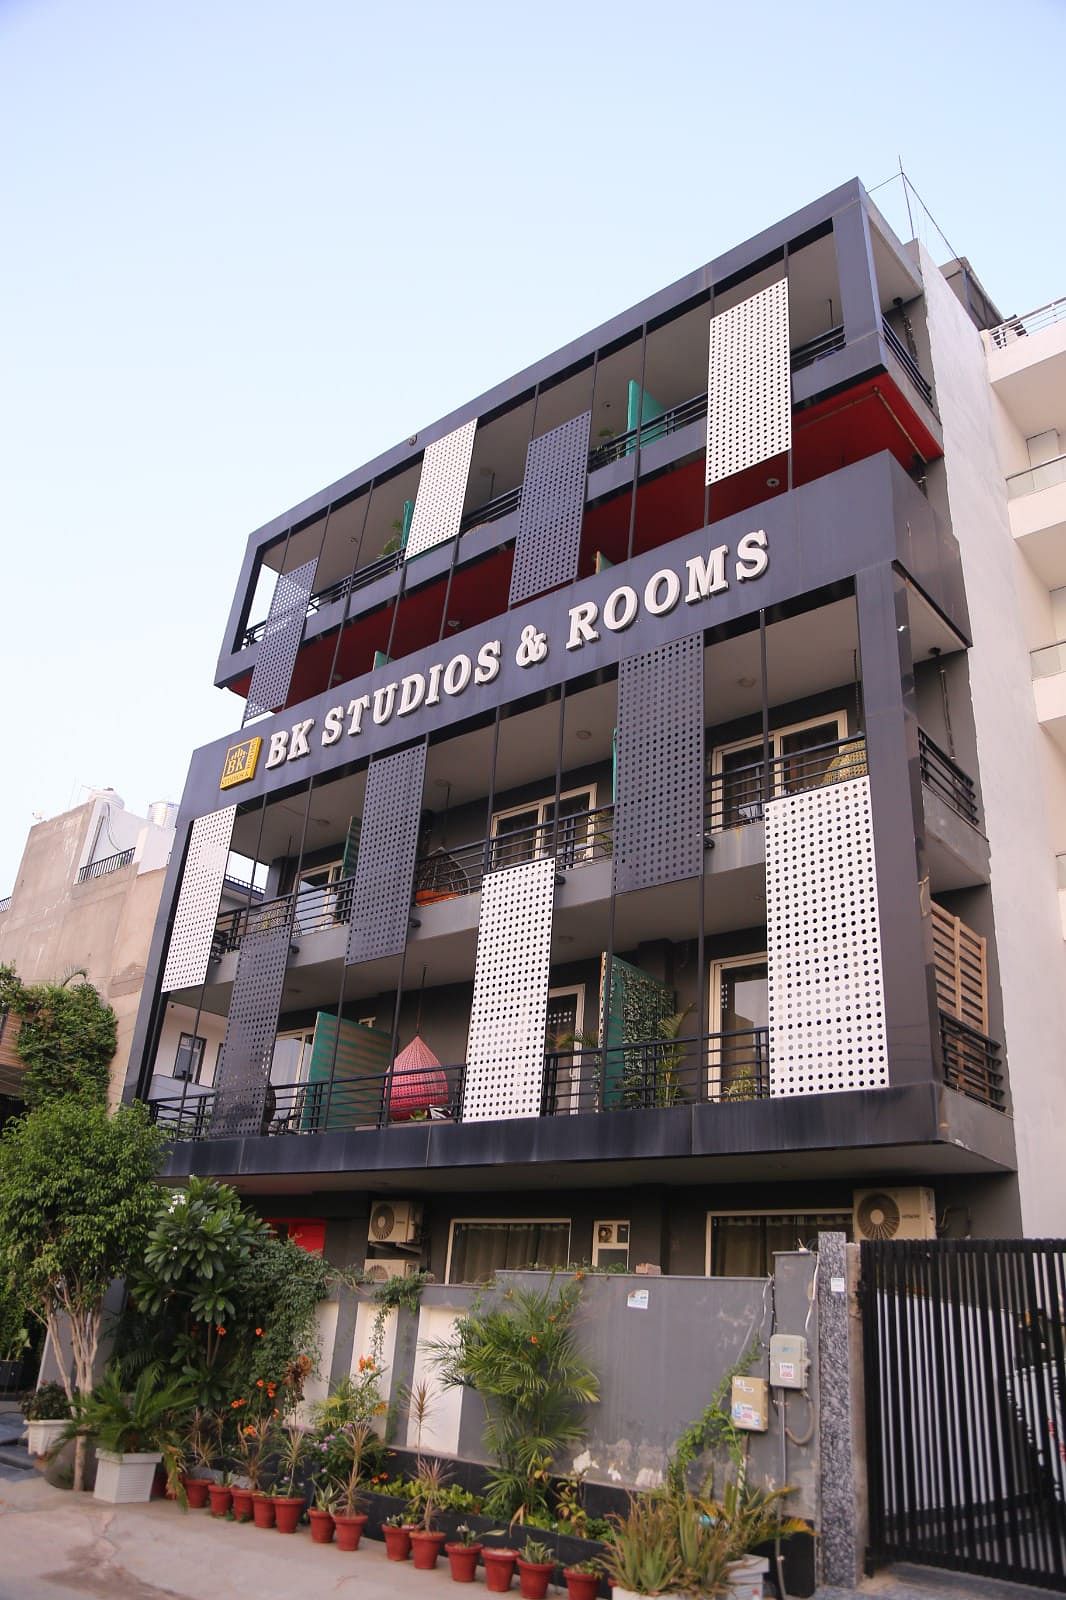 HOTEL BK STUDIOS ROOMS in Sector 45, Gurgaon